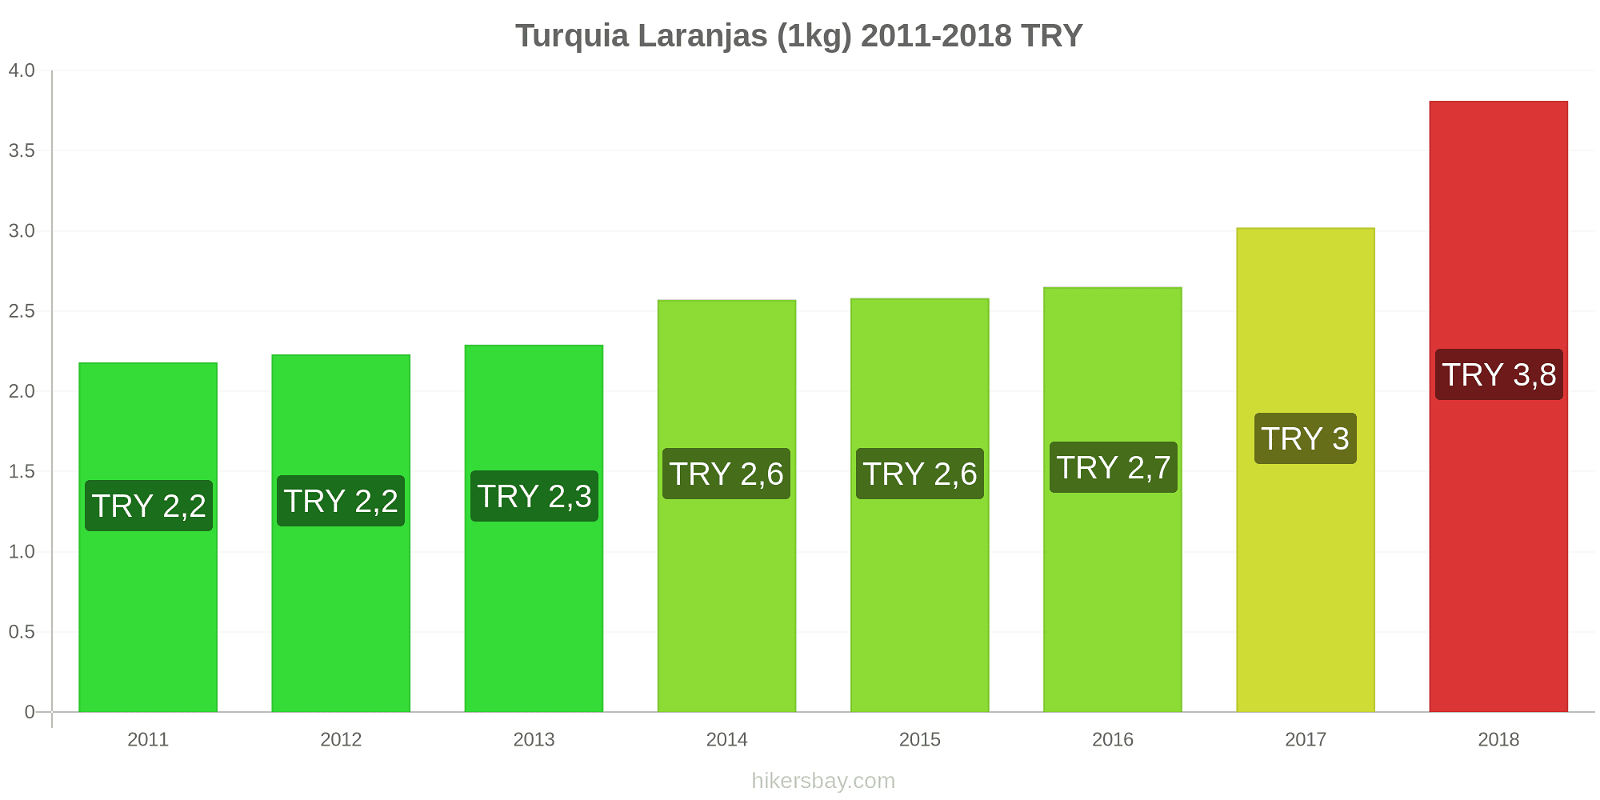 Turquia mudanças de preços Laranjas (1kg) hikersbay.com